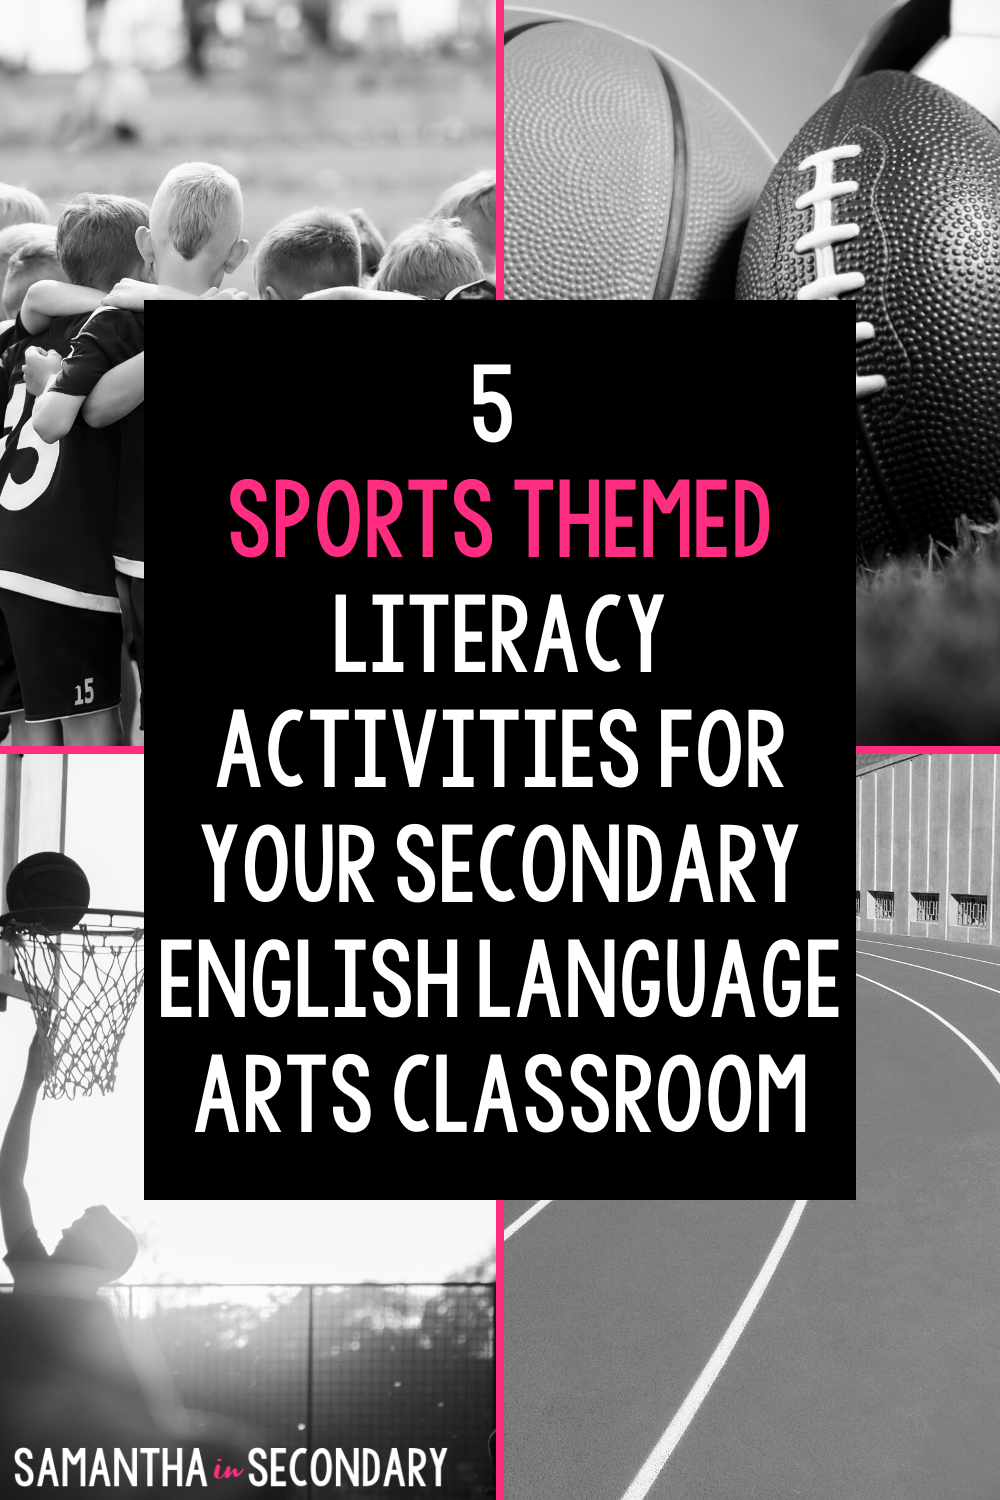 write a speech on sporting activities in school